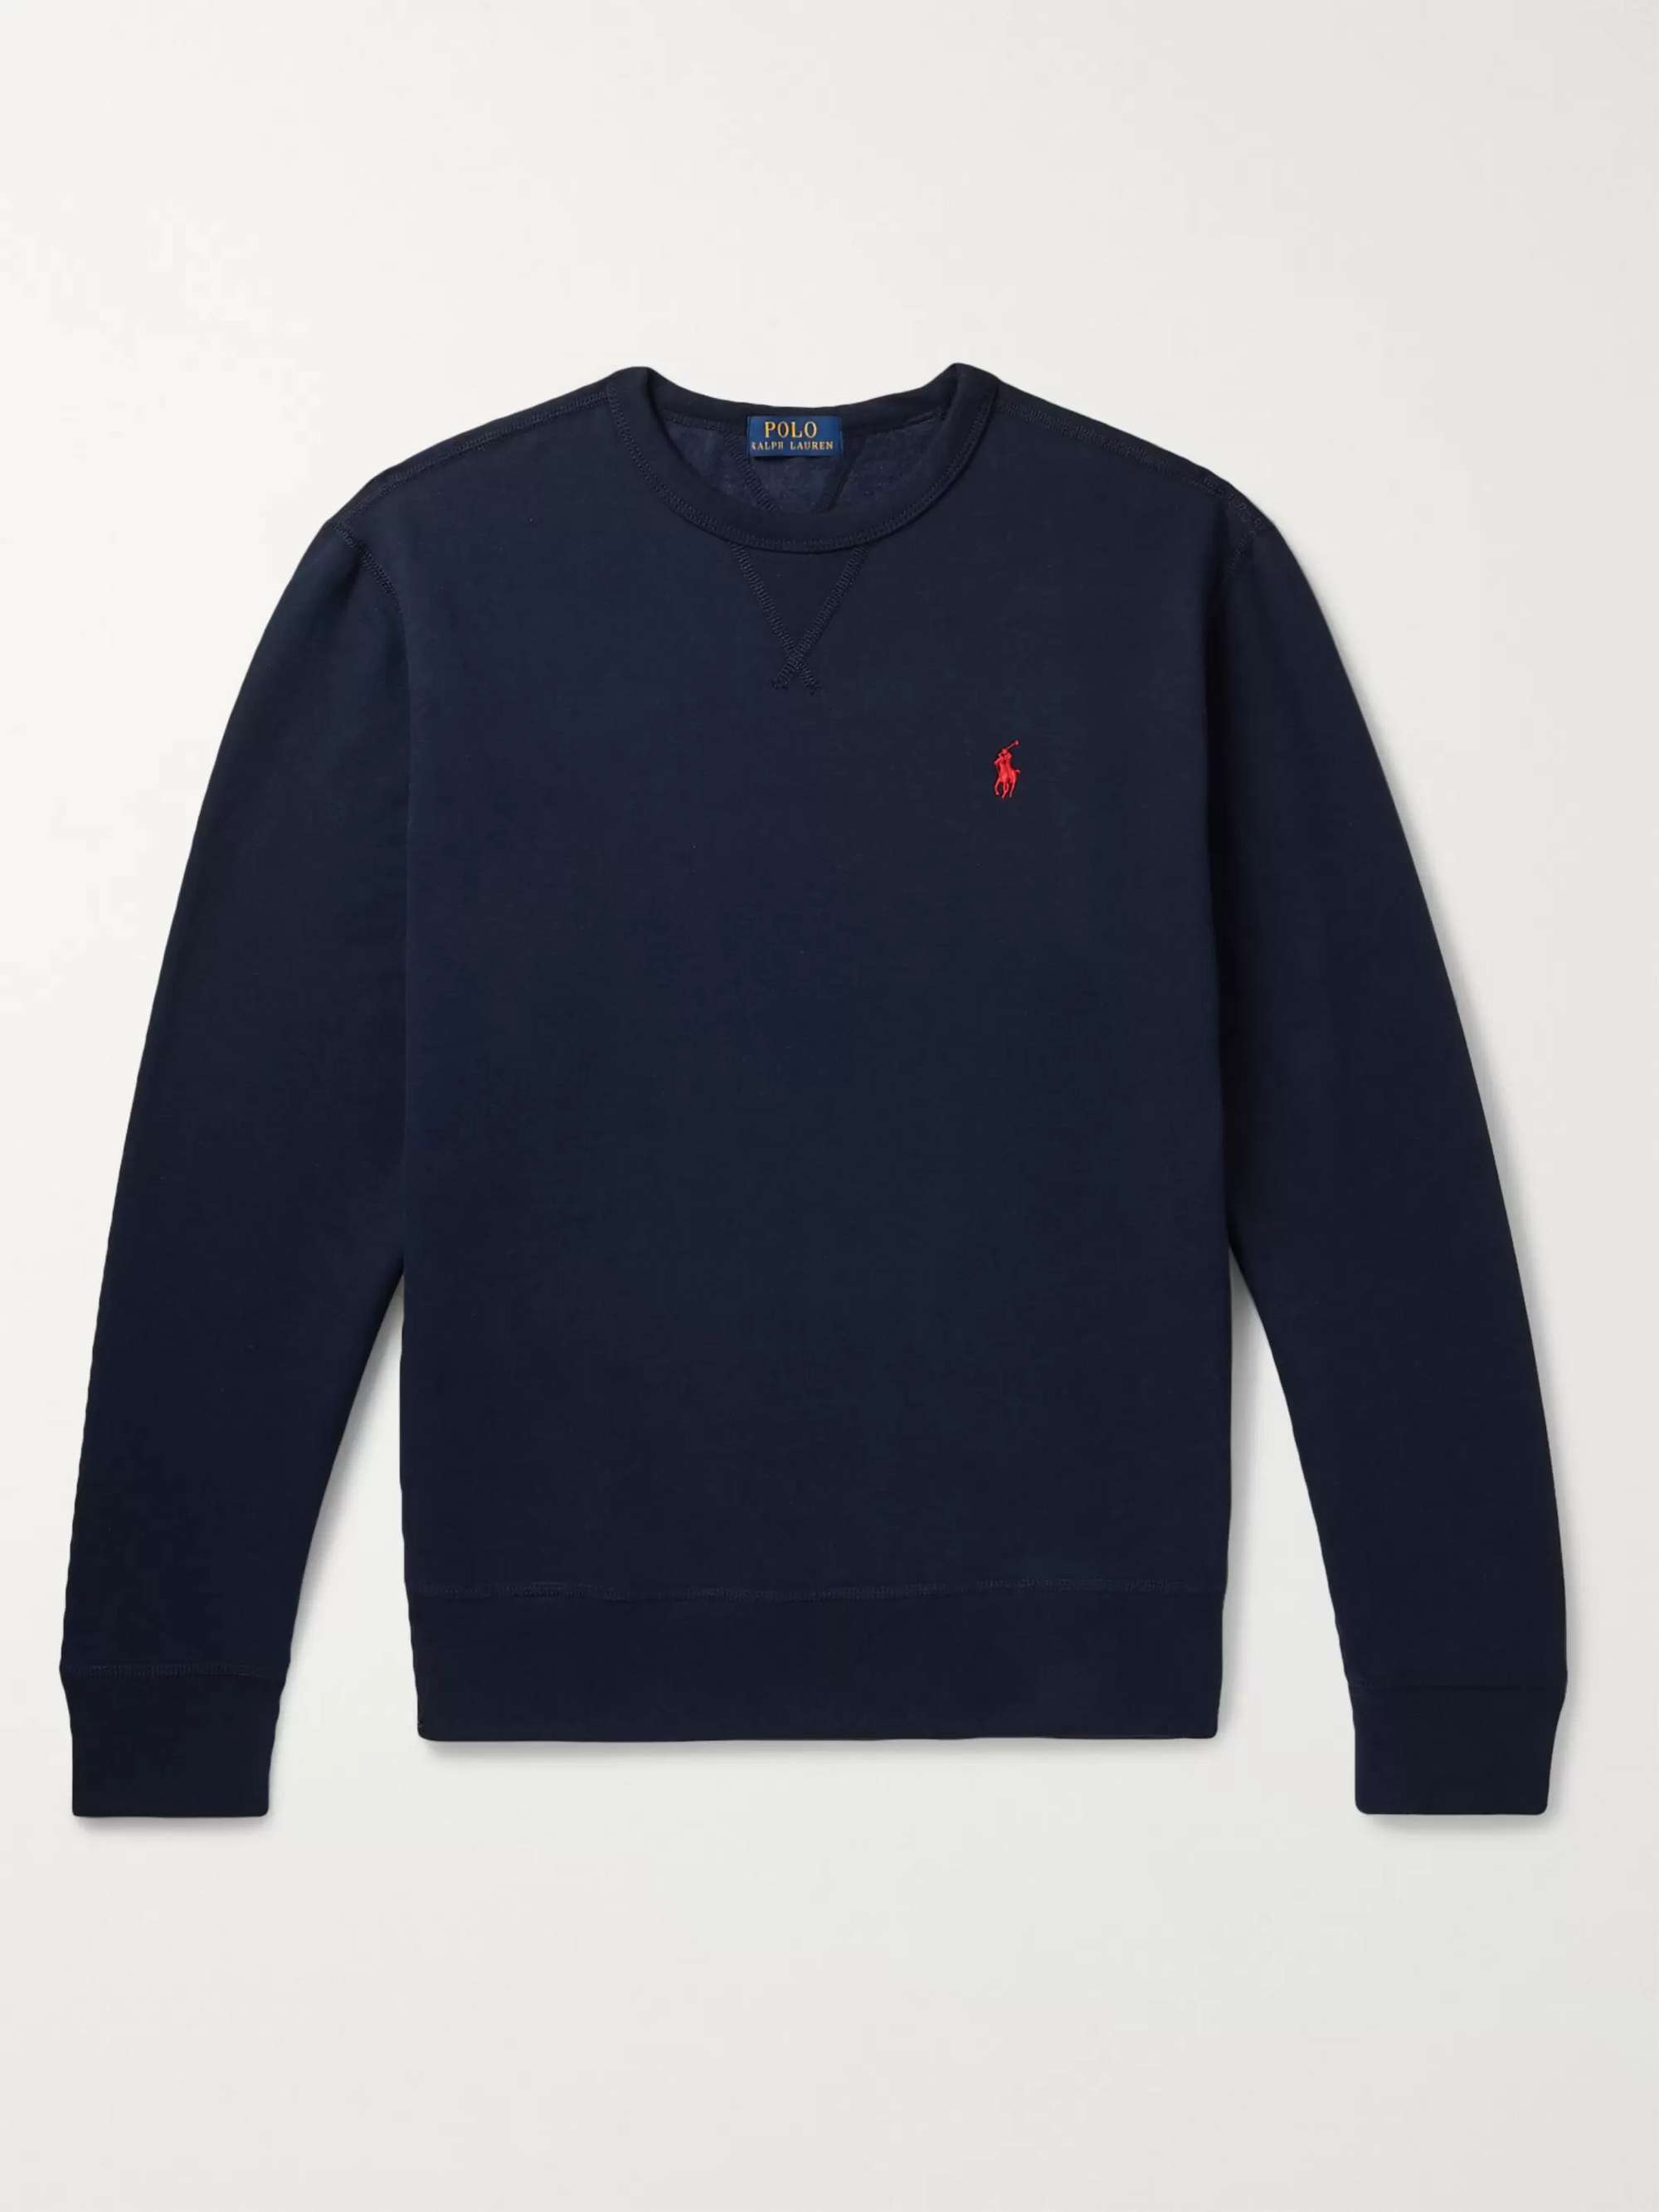 POLO RALPH LAUREN Logo-Embroidered Cotton-Blend Jersey Sweatshirt,Midnight blue